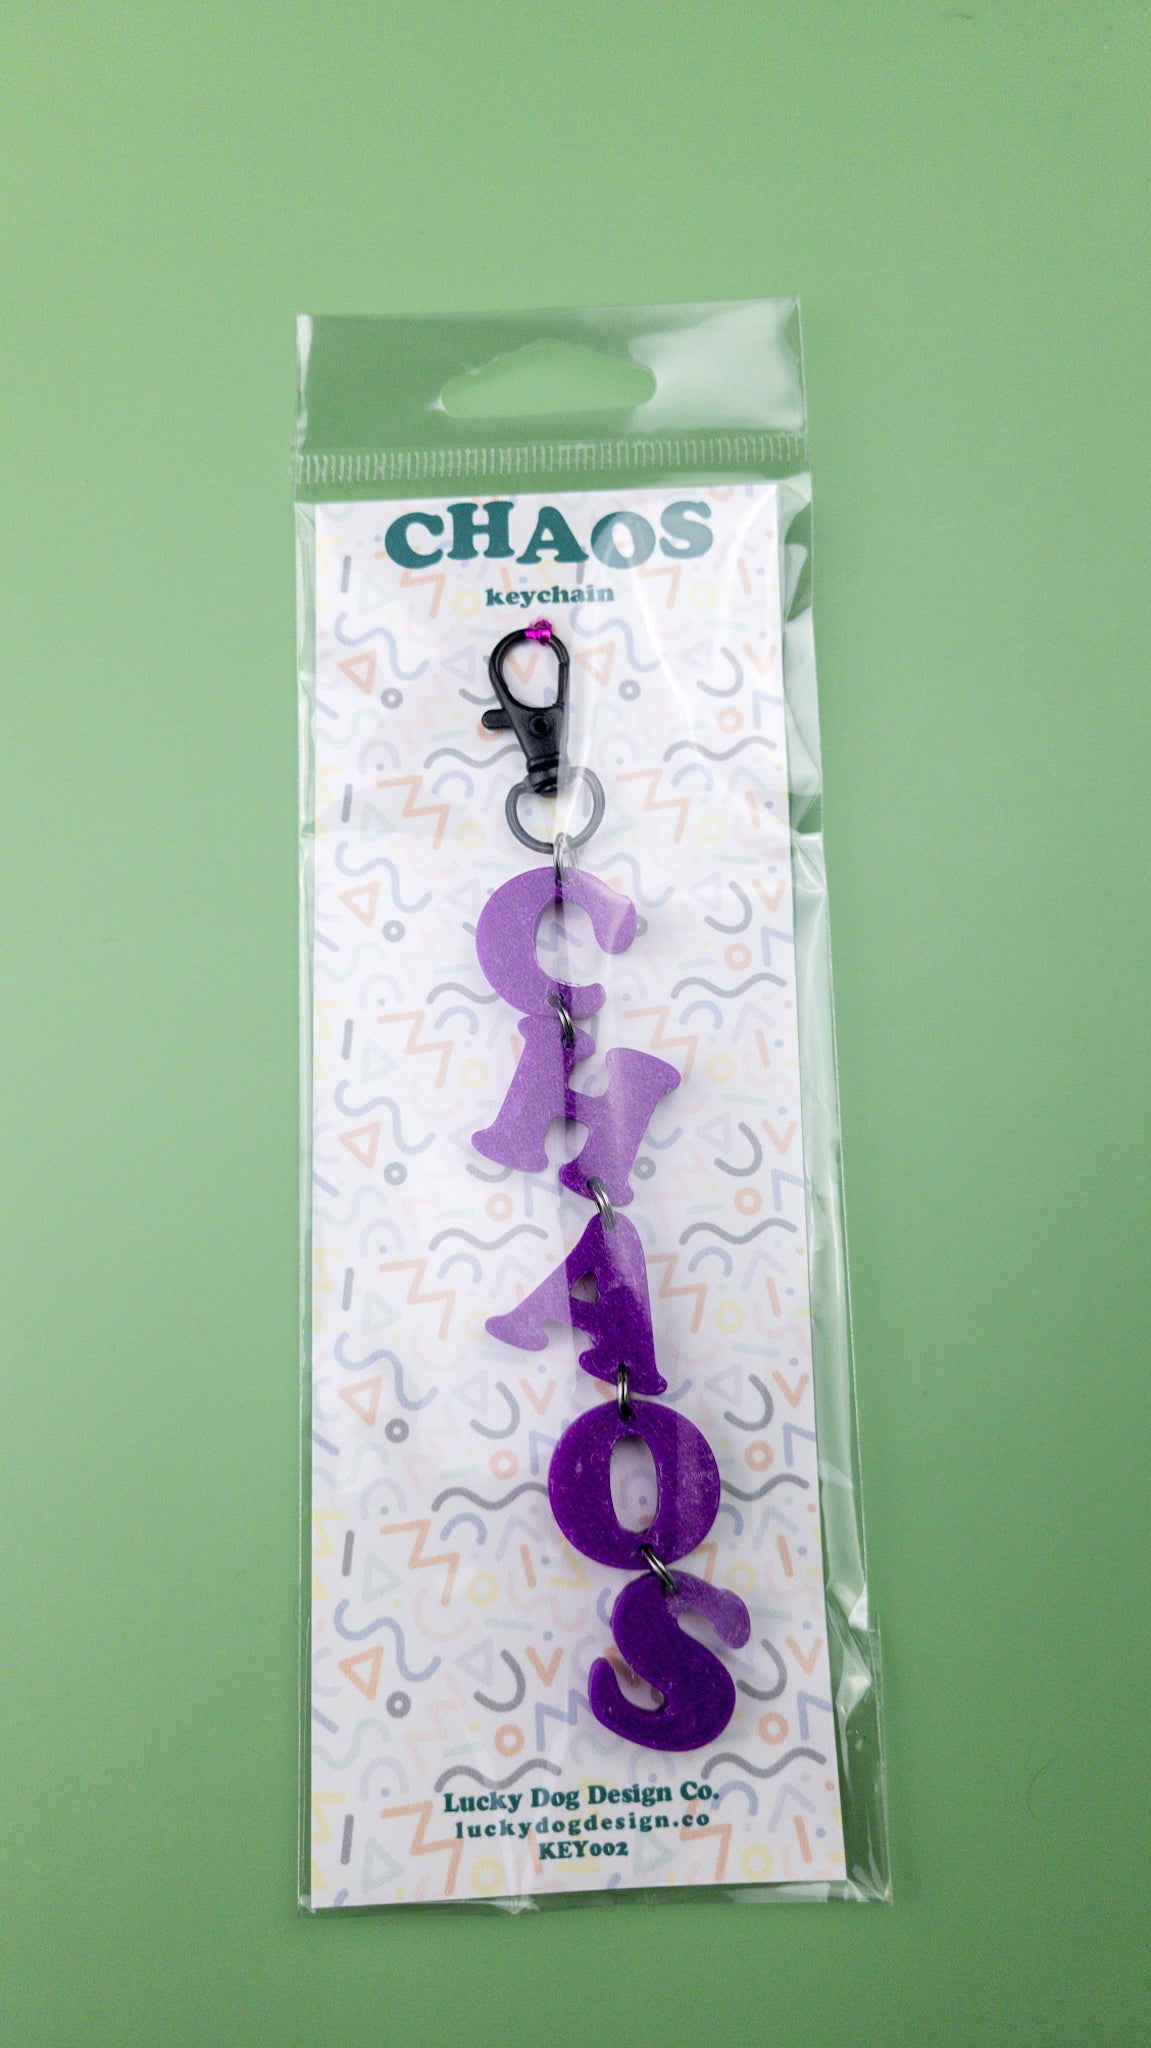 Chaos Keychain